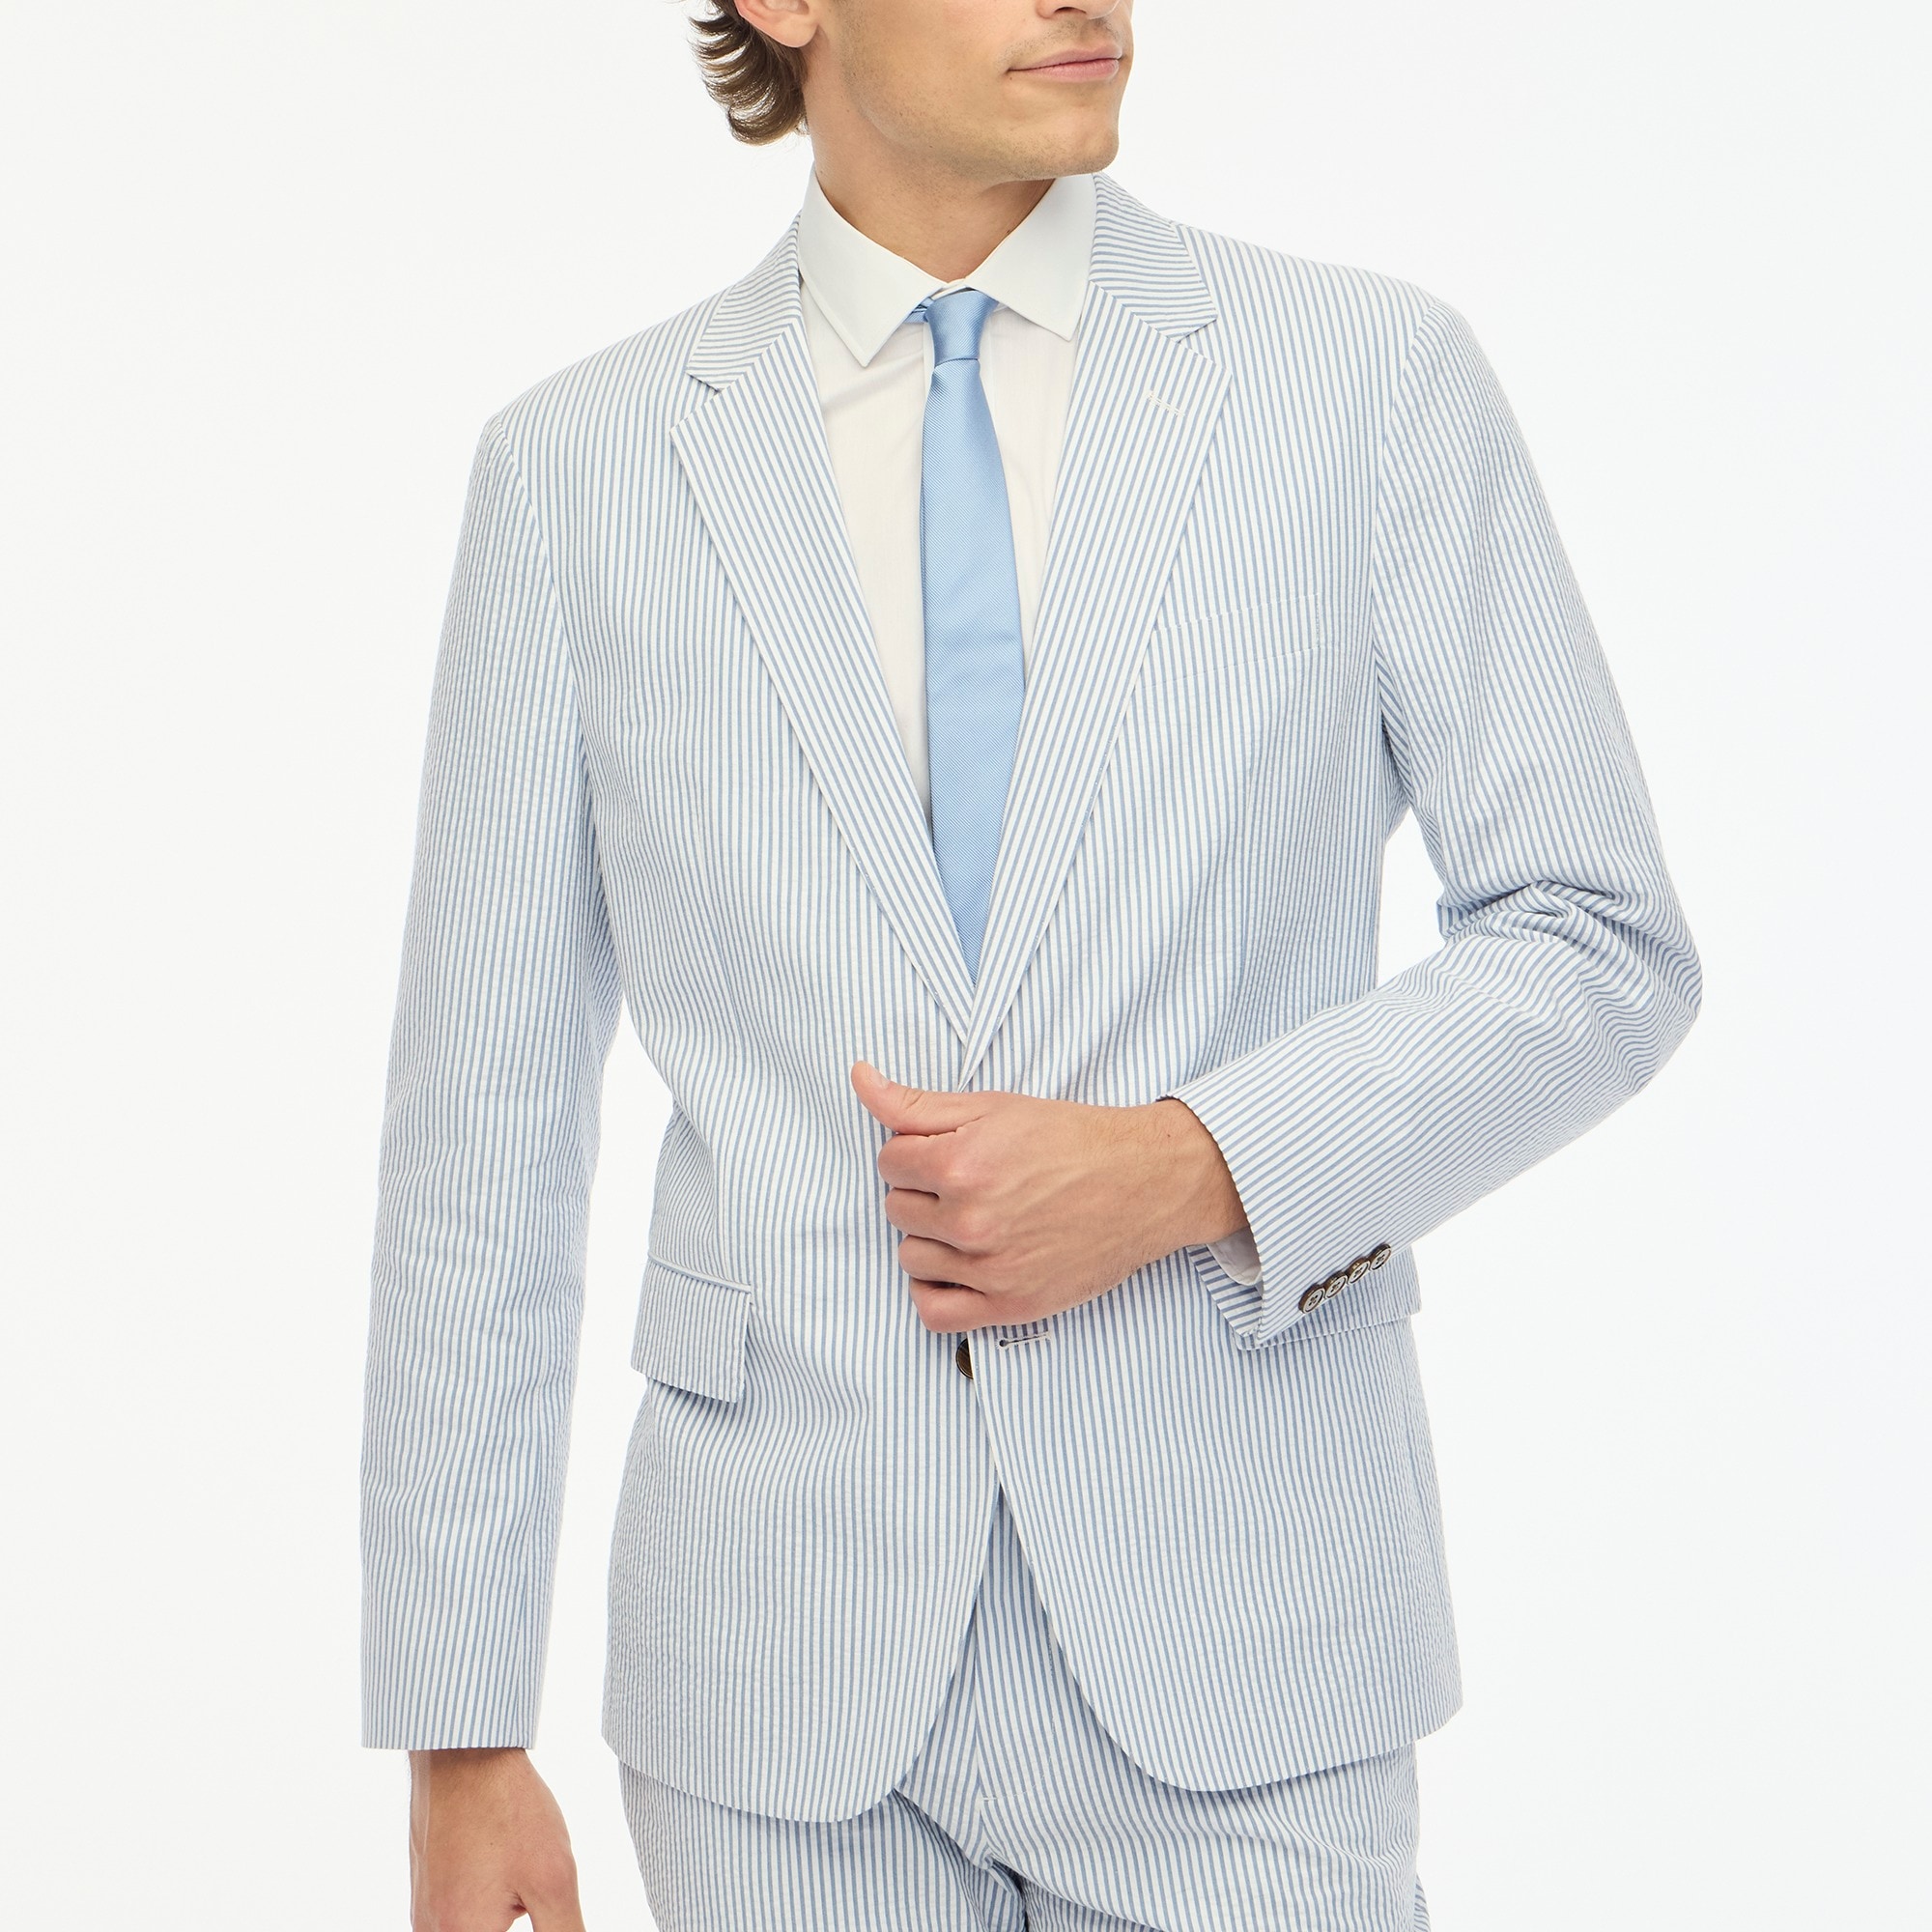 Slim unstructured Thompson suit jacket seersucker